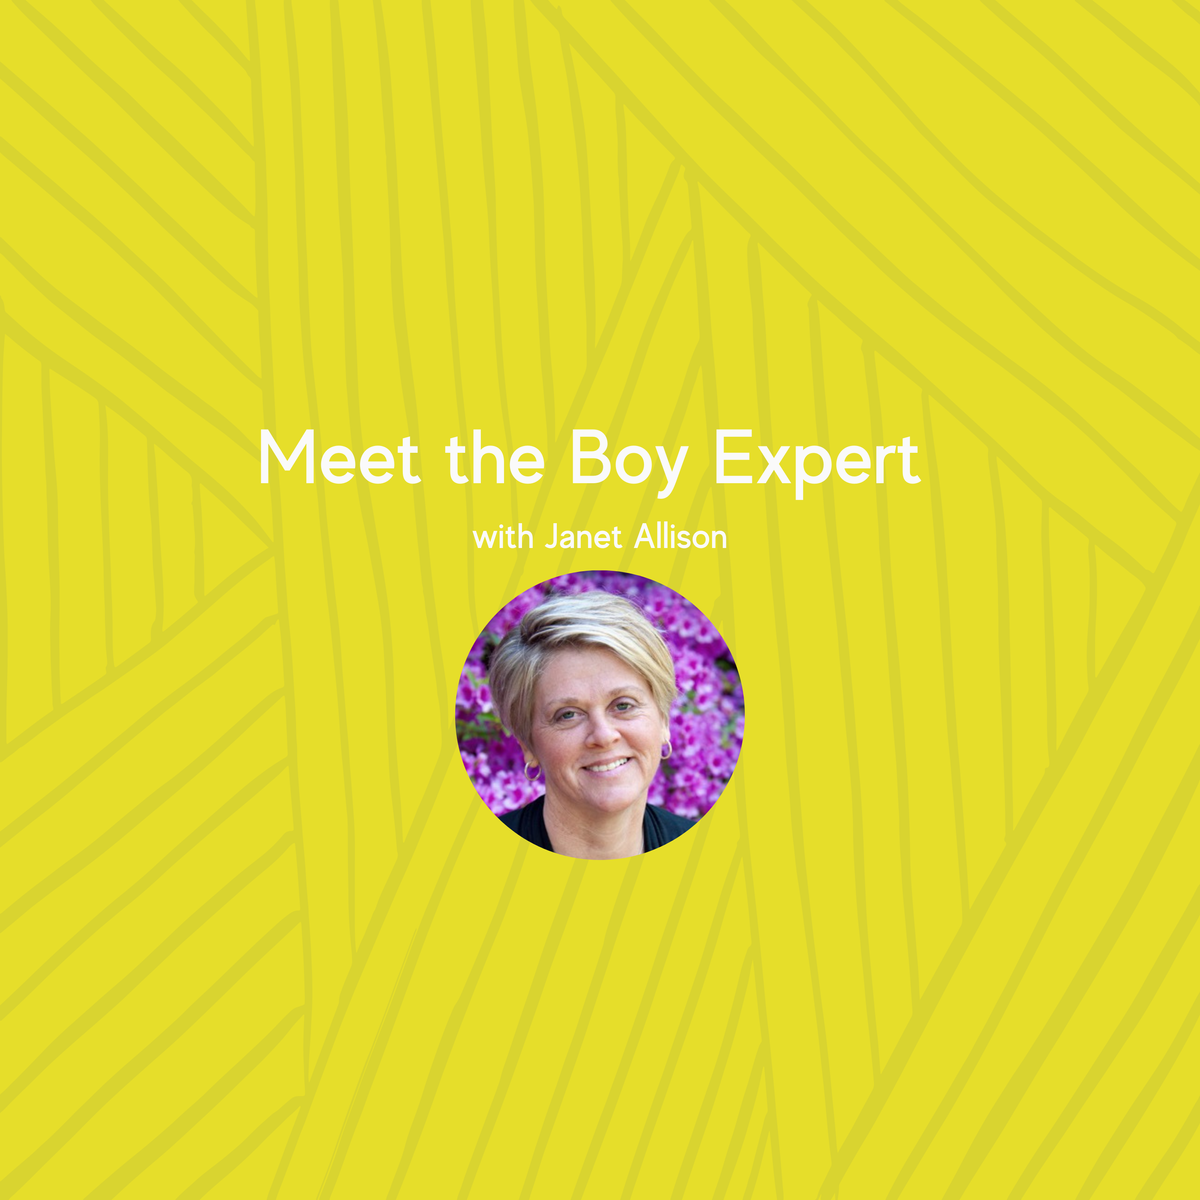 Meet the Boy Expert with Janet Allison